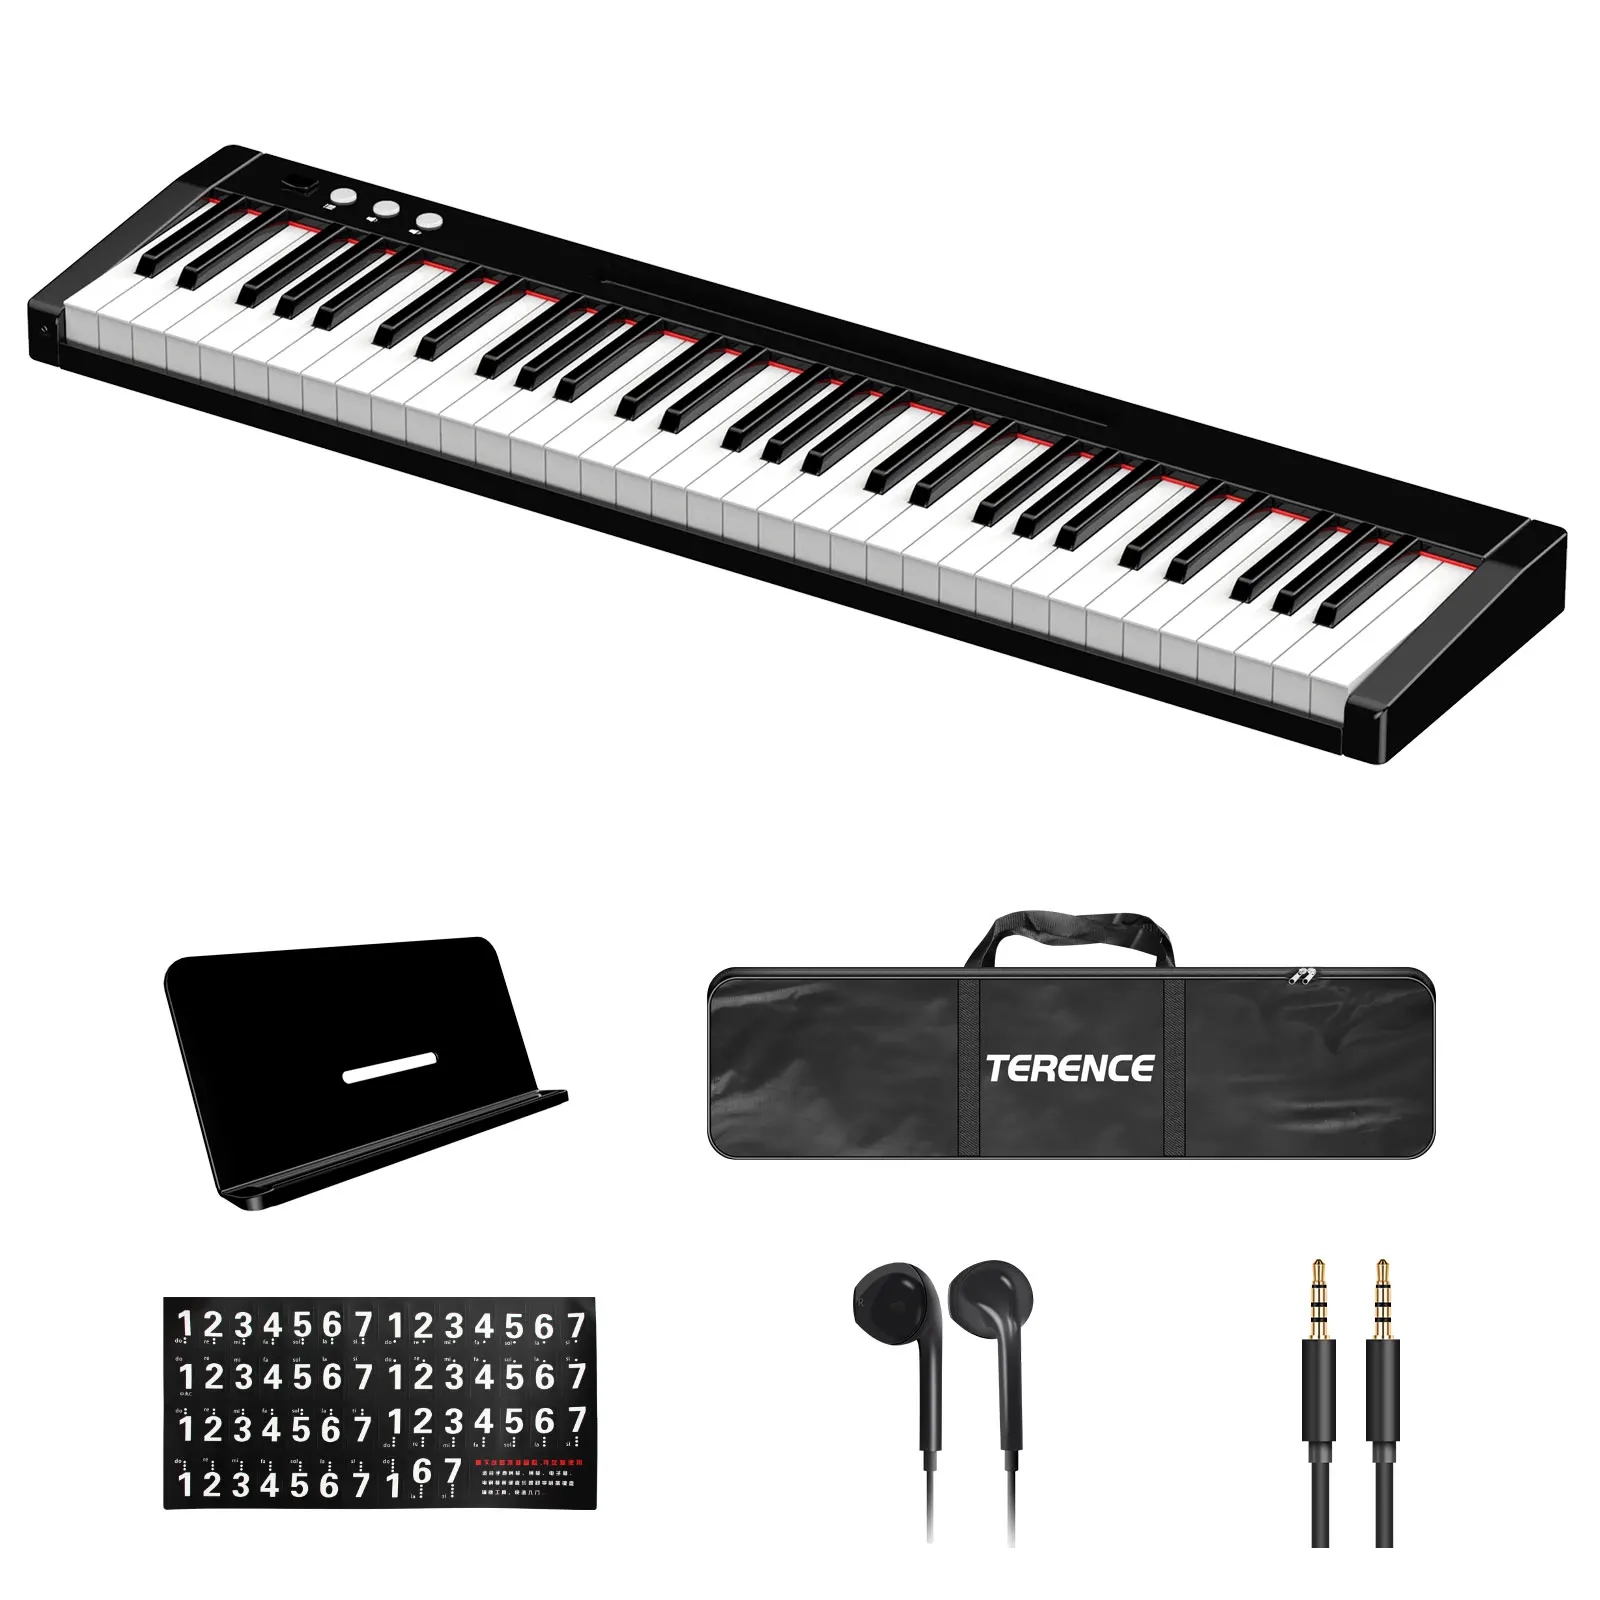 

TERENCE Smart Electronic Organ 61 key 128 Rhythms 140 tones 60 demos Digital Desktop Piano Keyboard